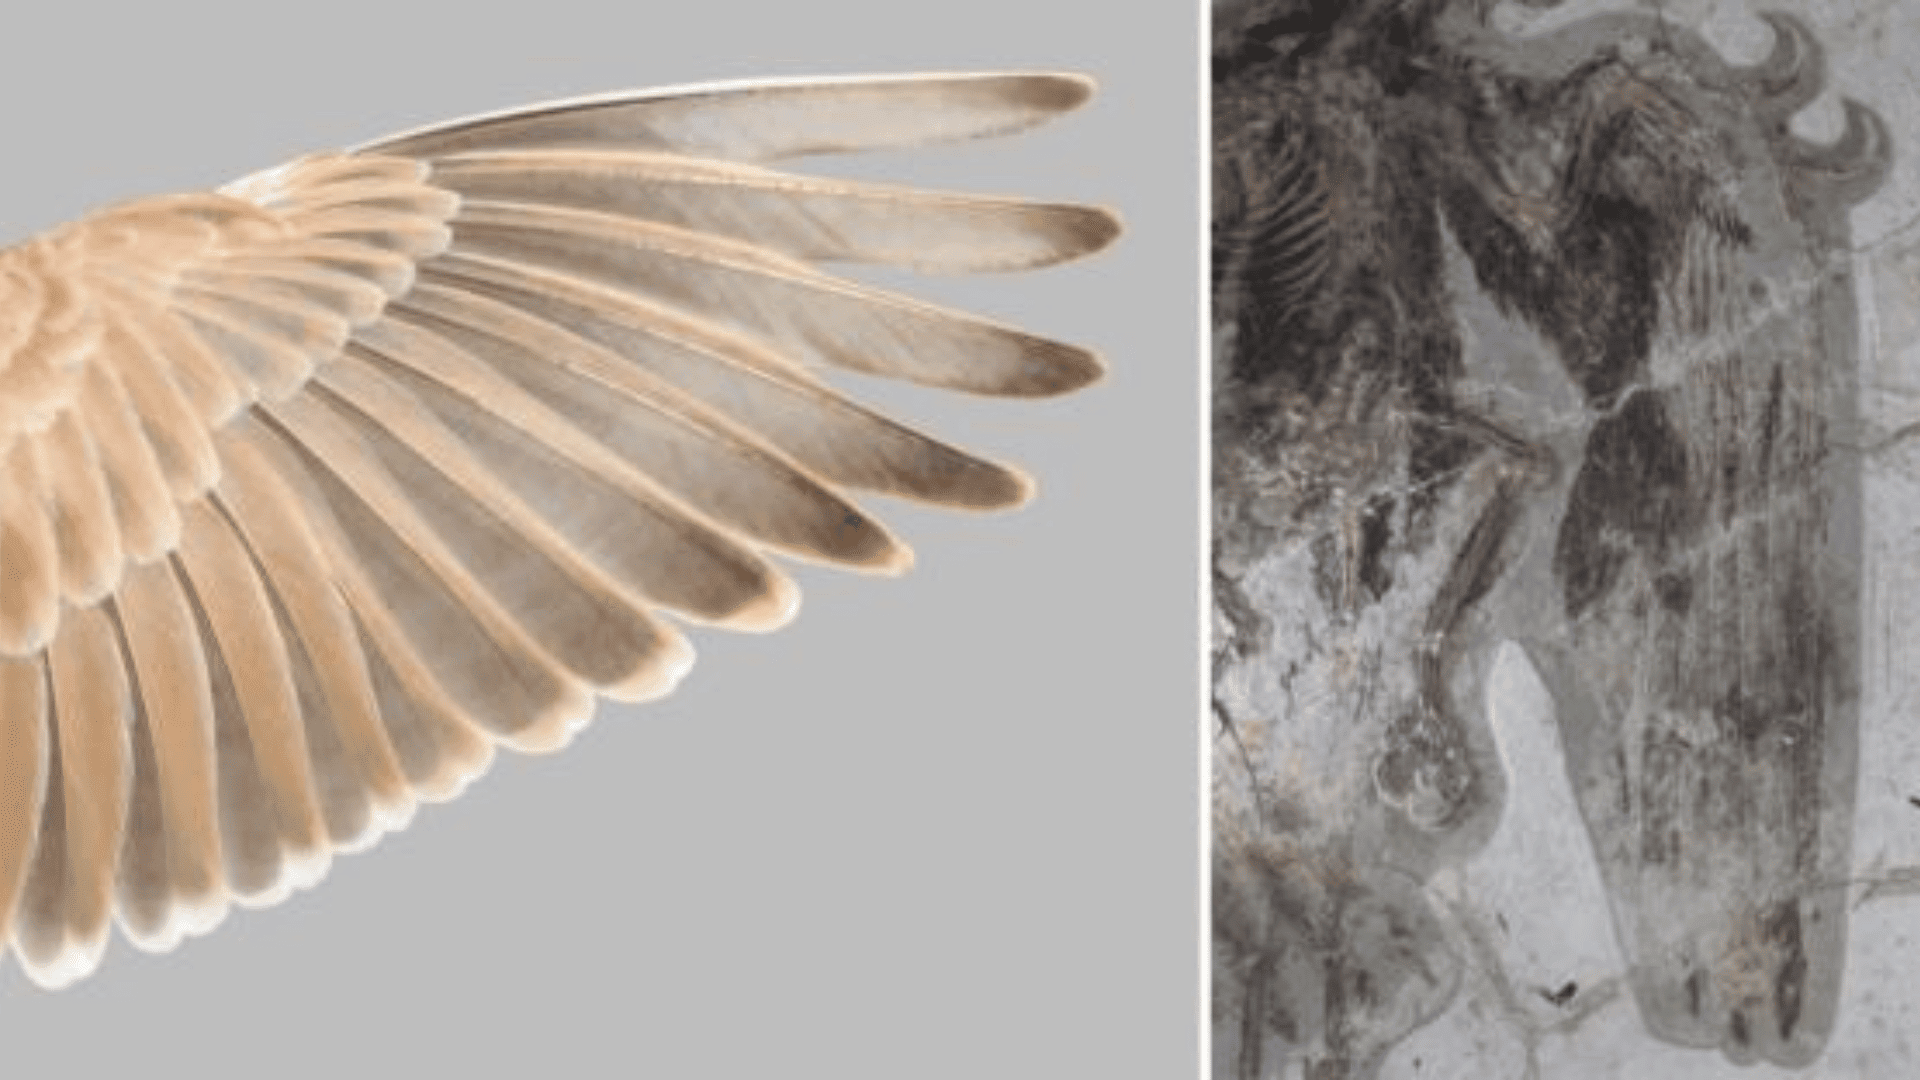 Flight feathers of Temminck's Lark Eremophila bilopha (left) and wing of a fossil bird, Confuciusornis (right). (Yosef Kiat)